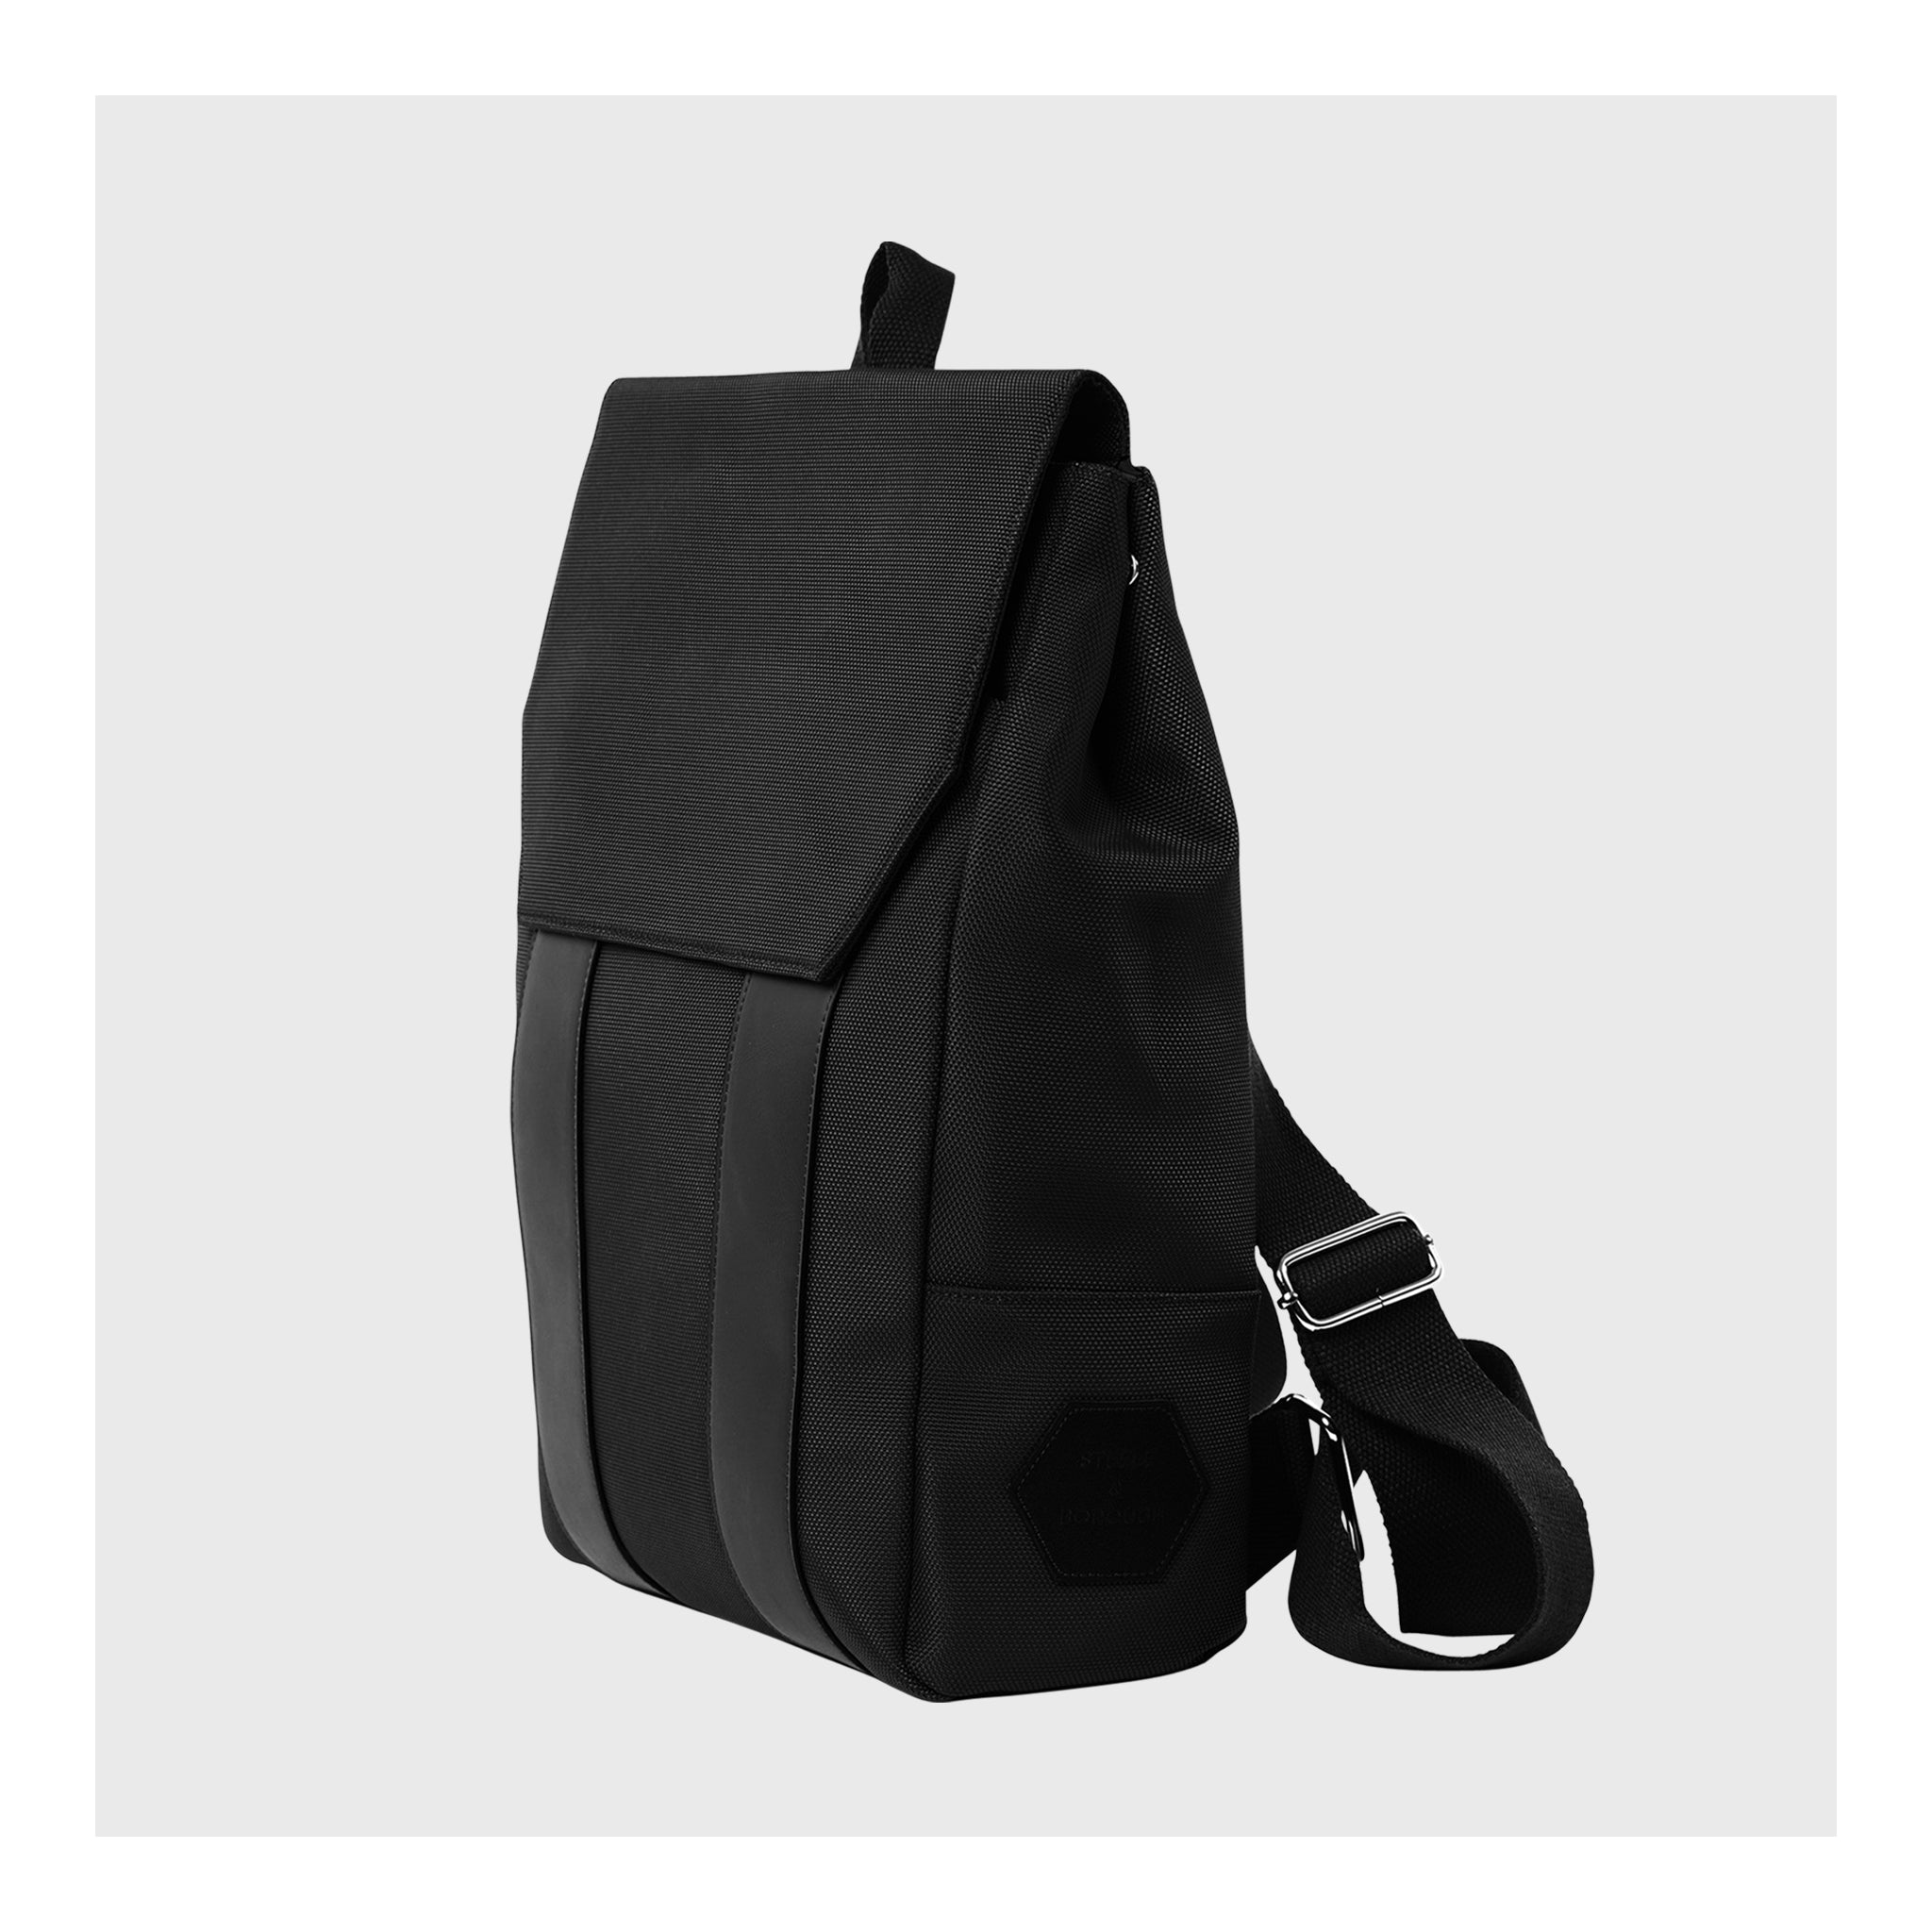 The Backpack Black